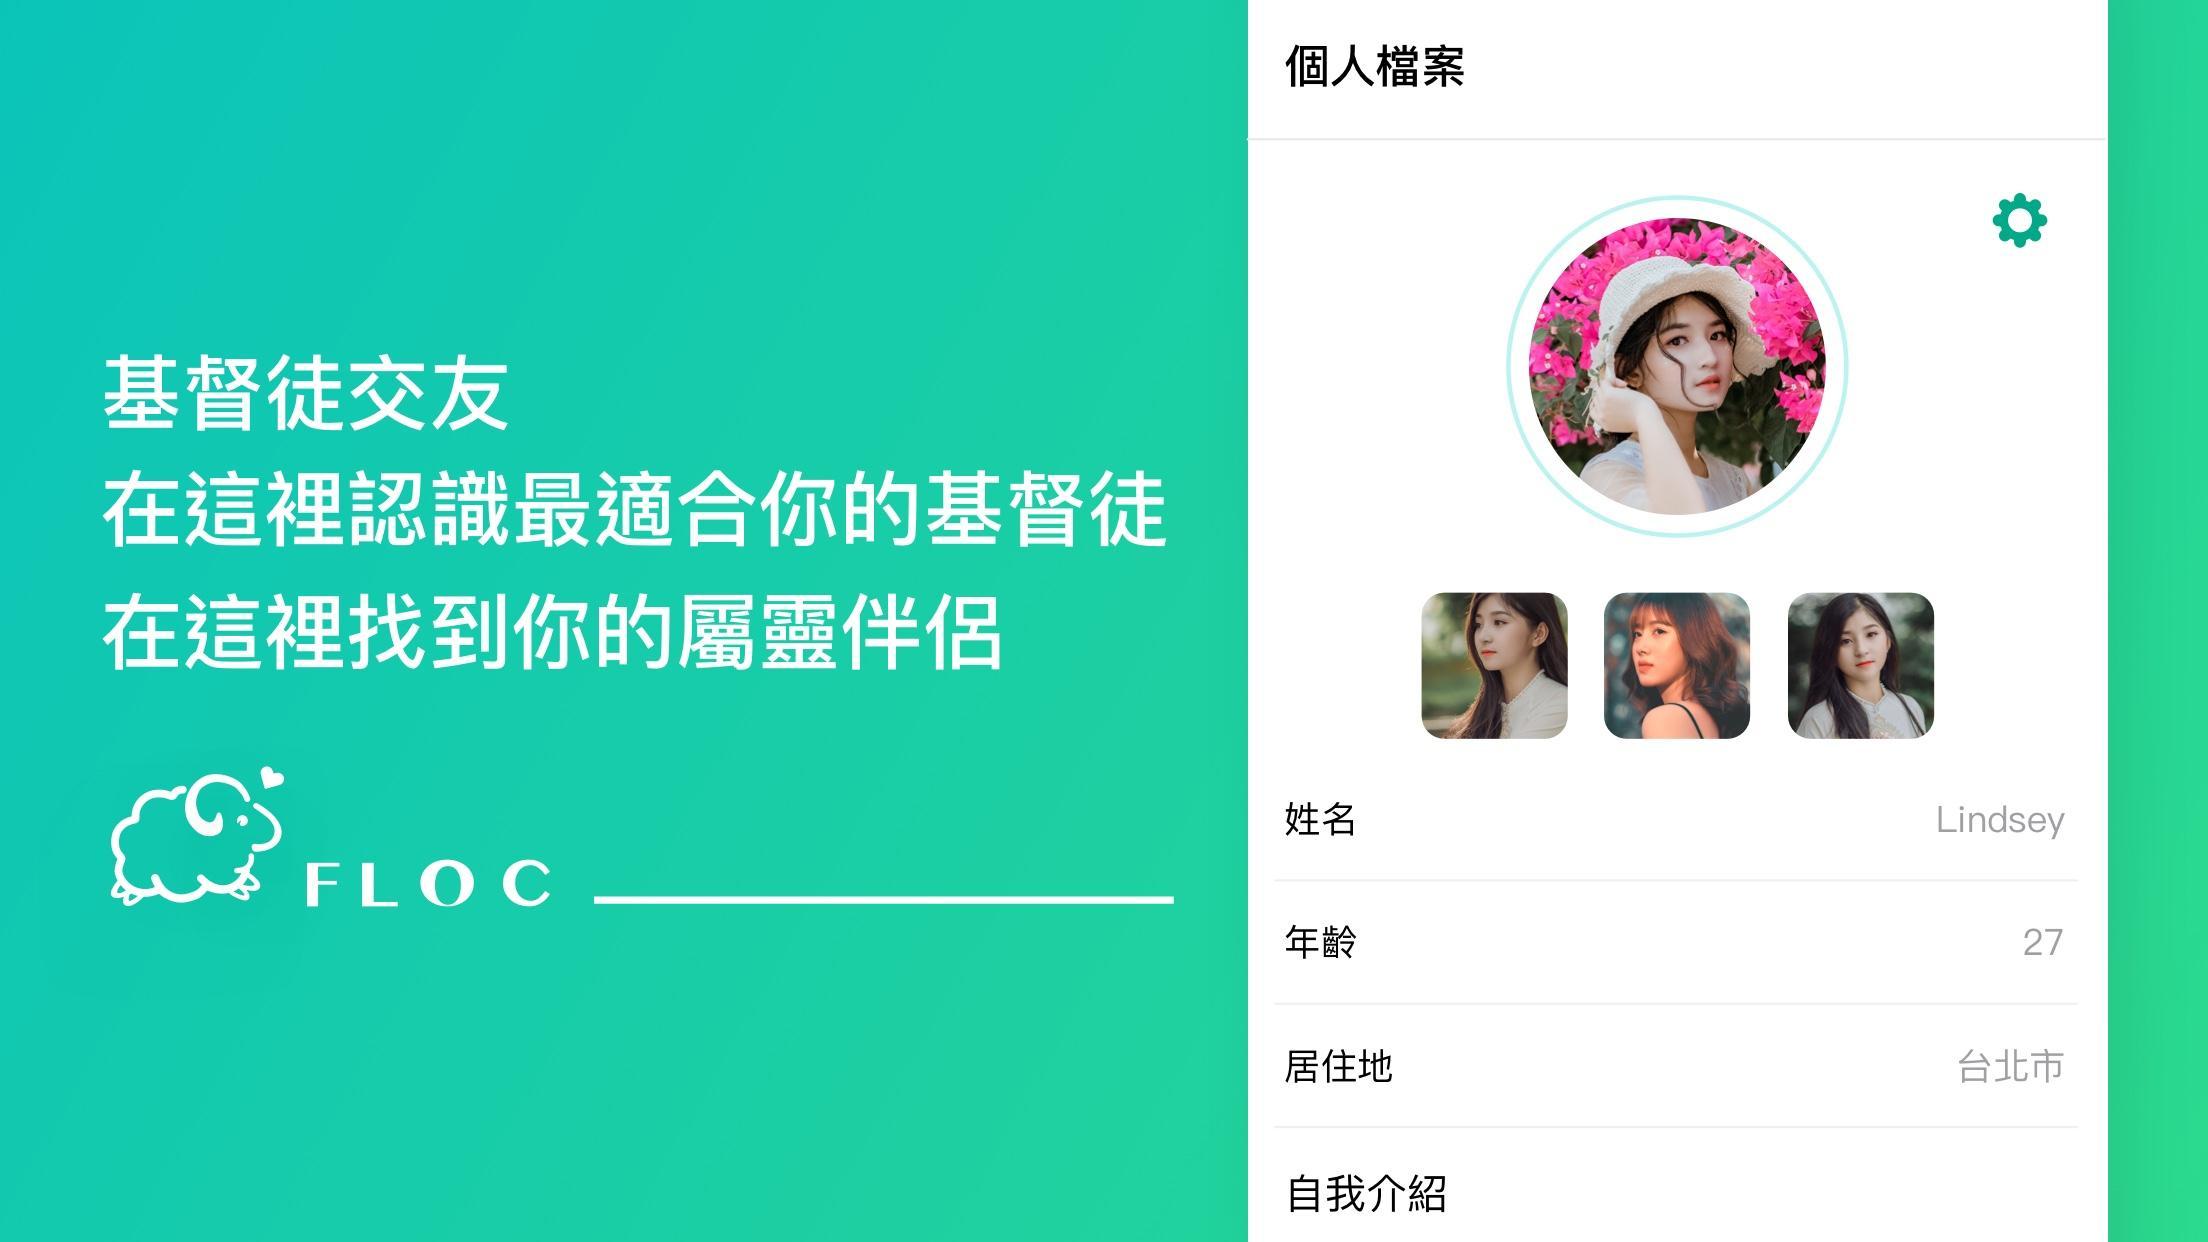 FLOC - a dating app designed for Christian 1.0.6 Screenshot 5